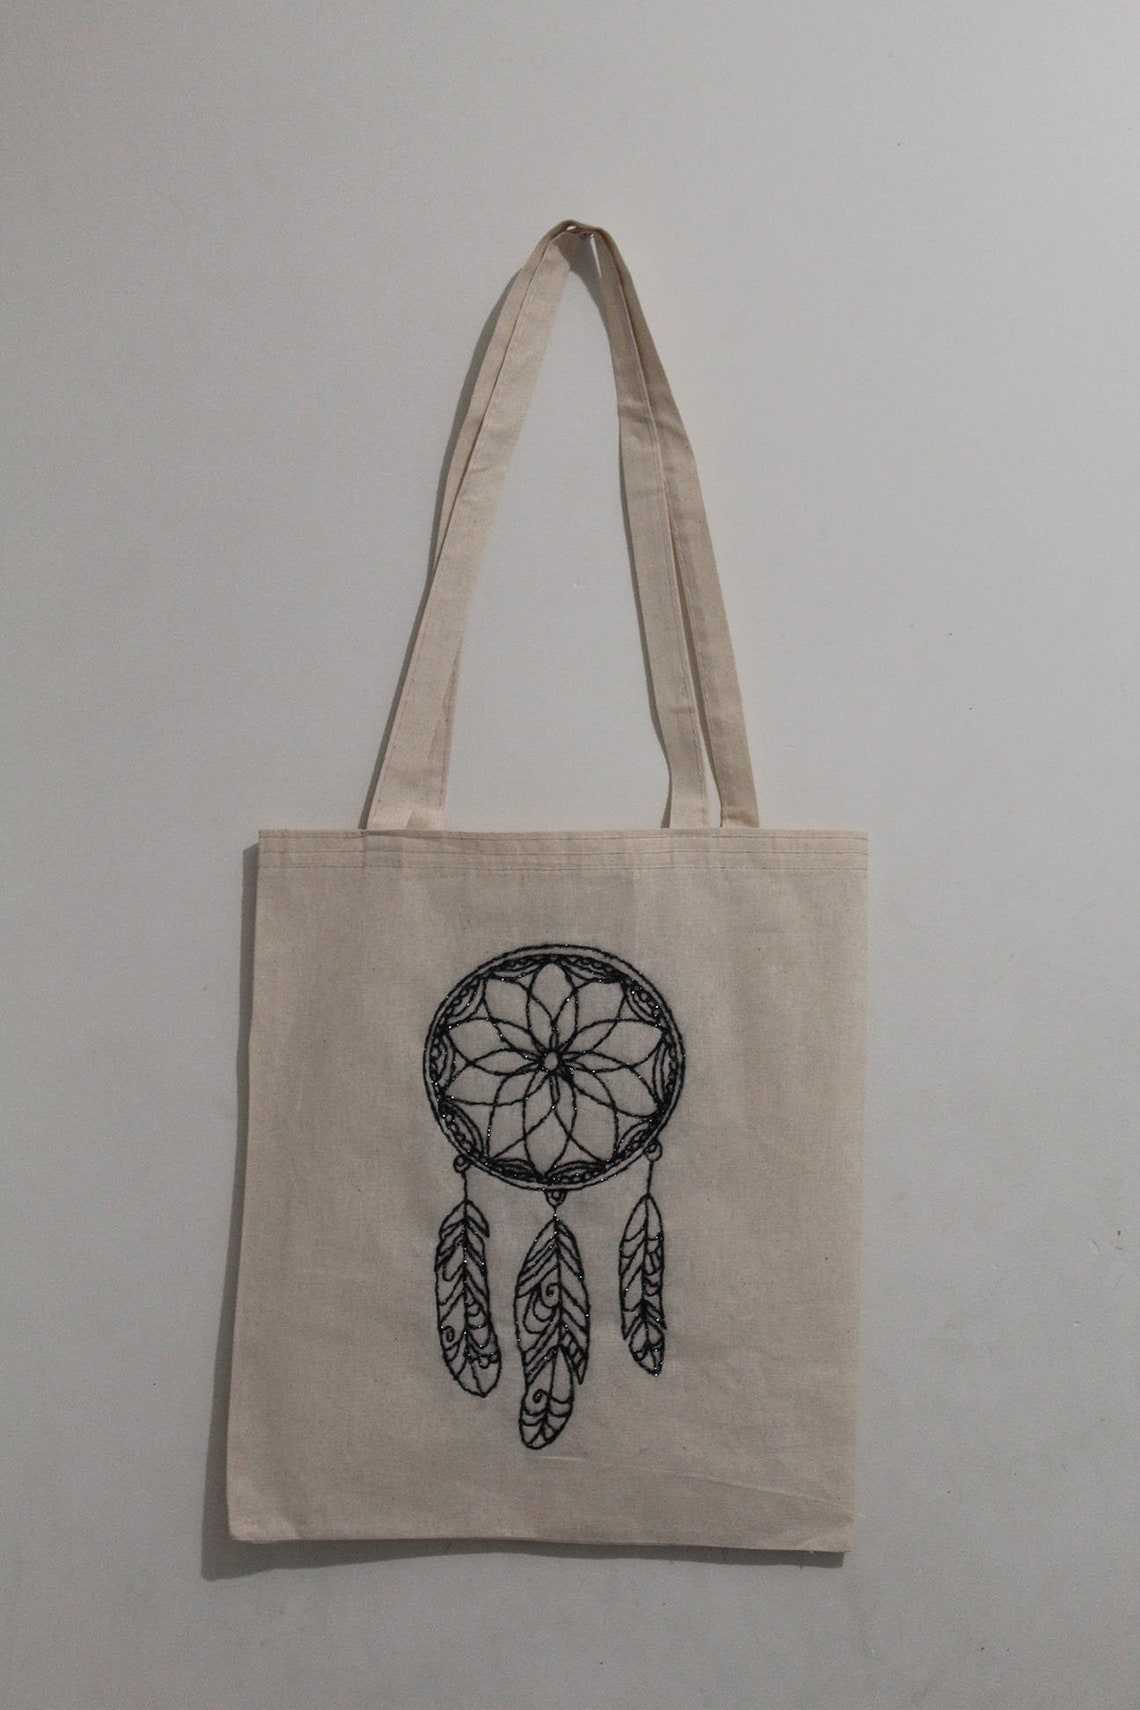 Dreamcatcher Design Handmade Tote Bag Organic Cotton | Etsy